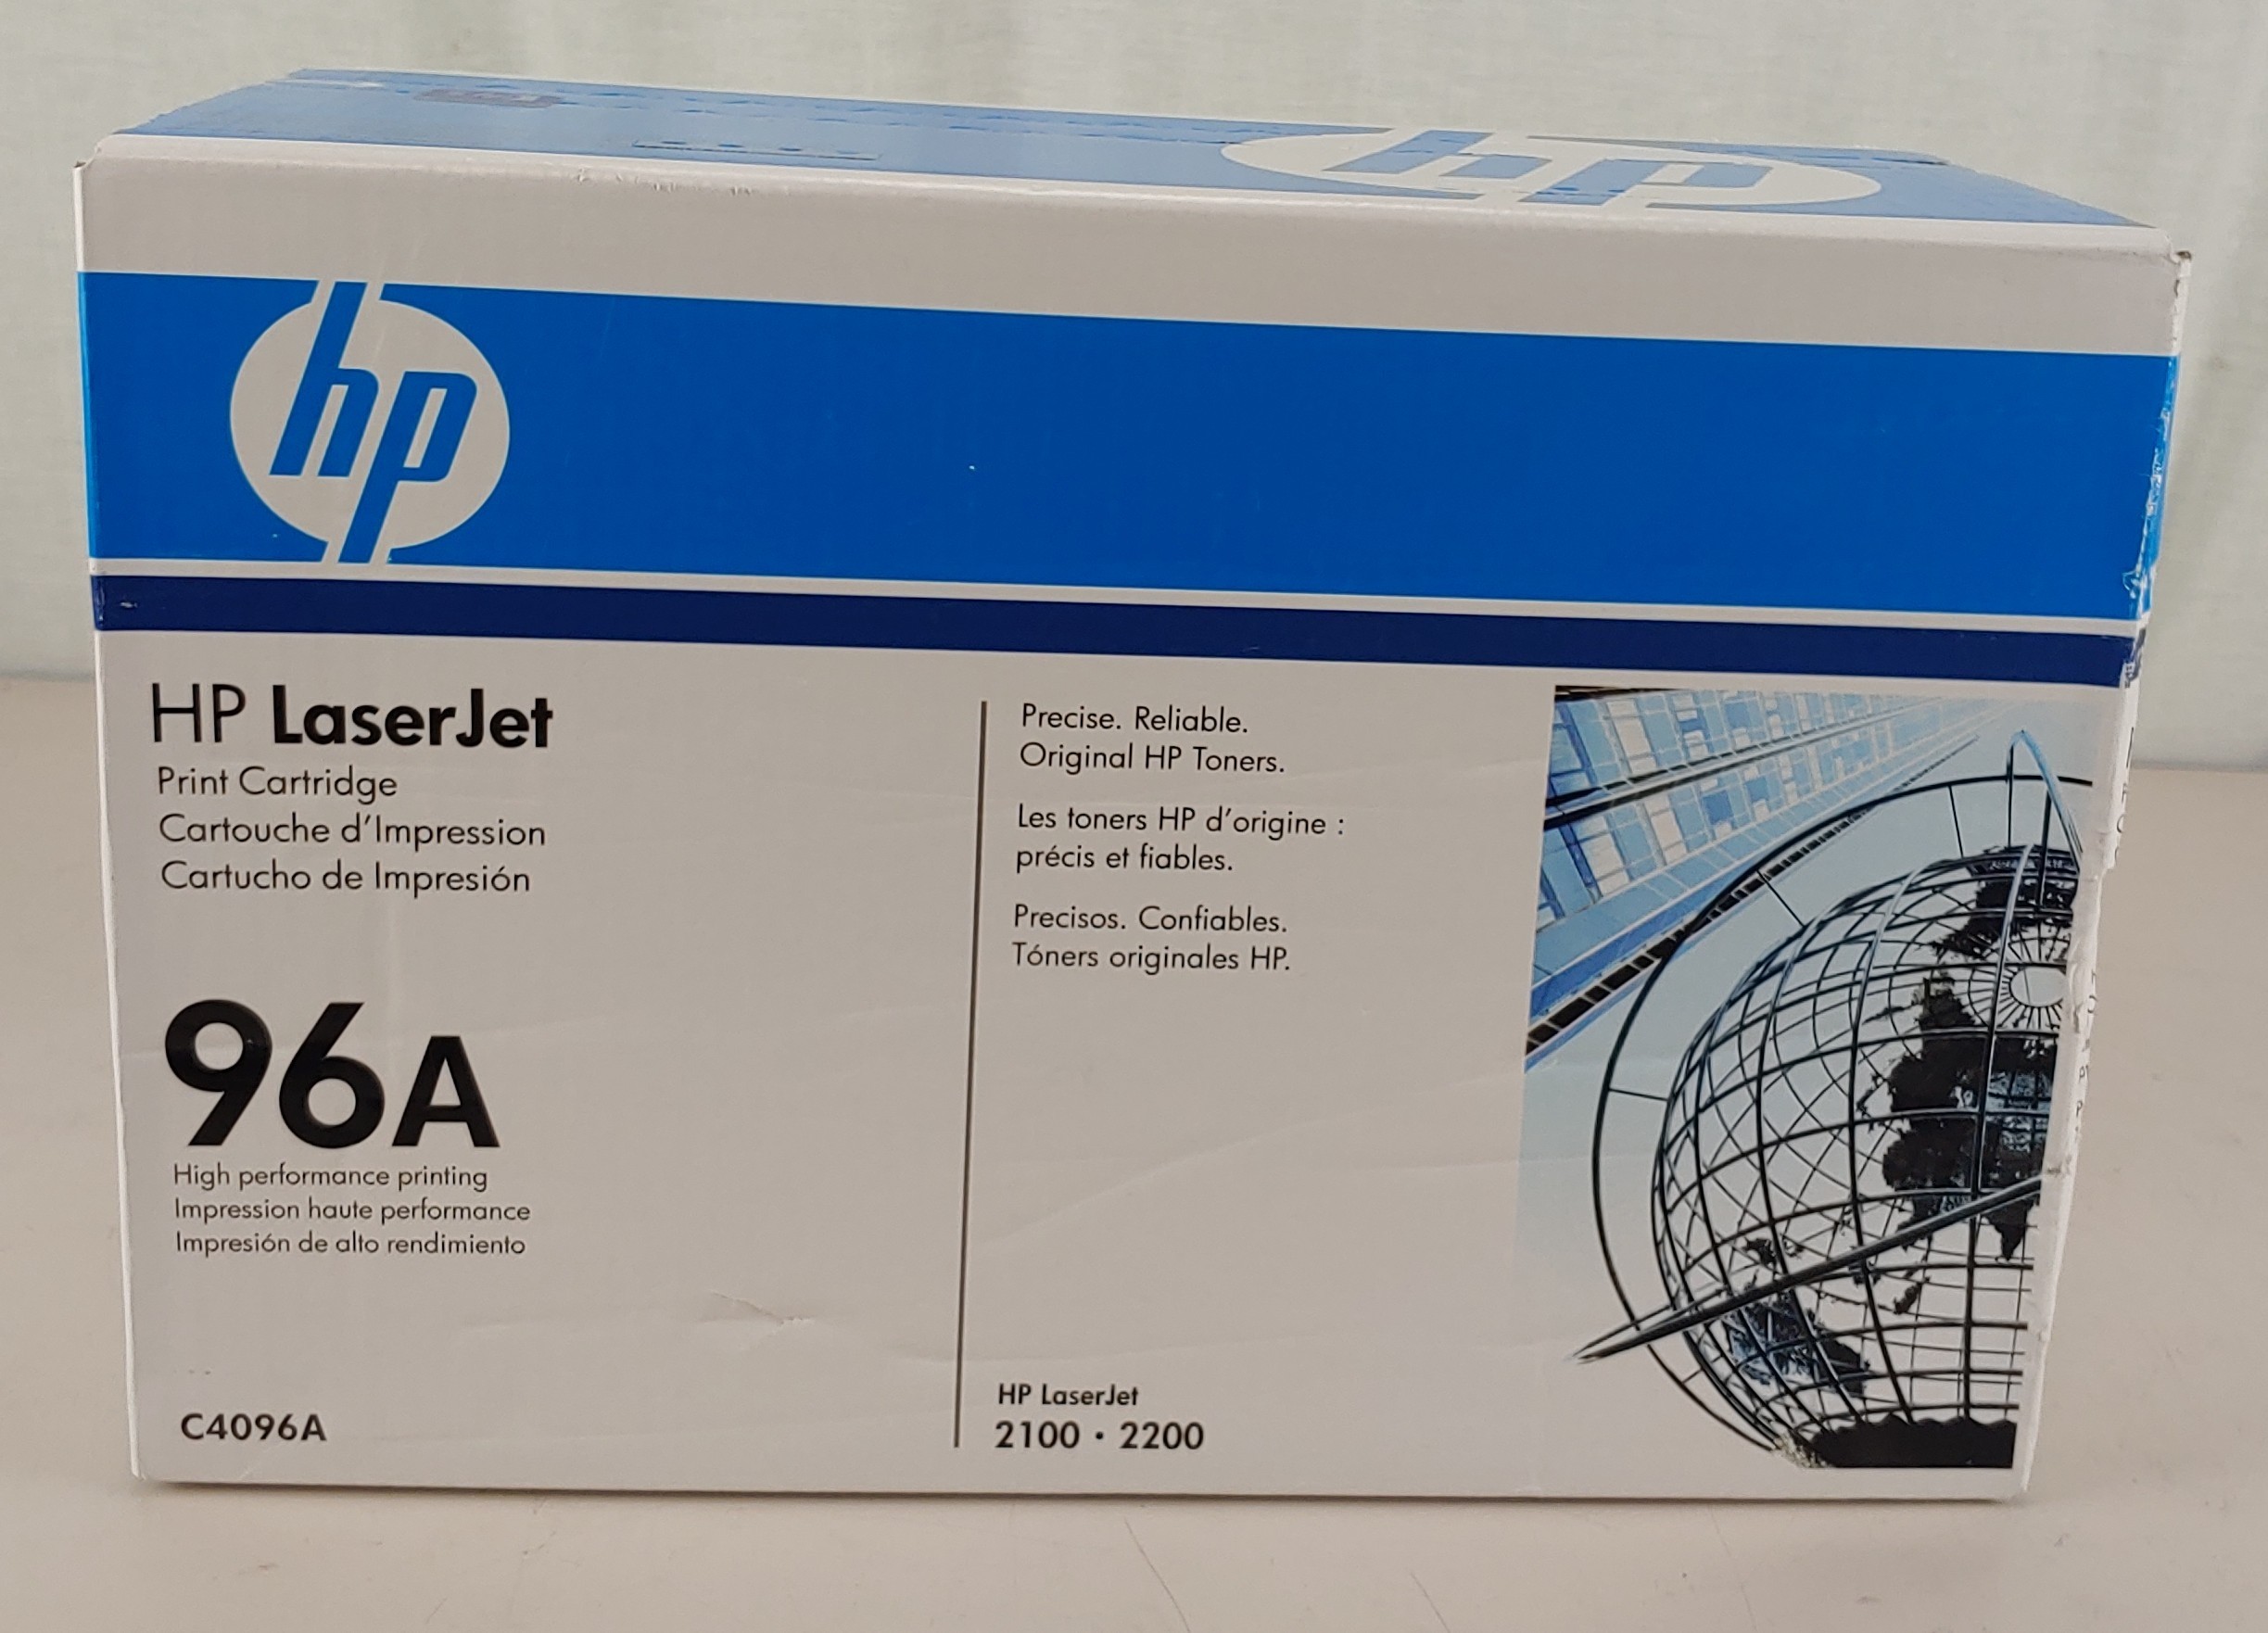 HP LaserJet 96A Black Cartridge C4096A Genuine New Unopened 